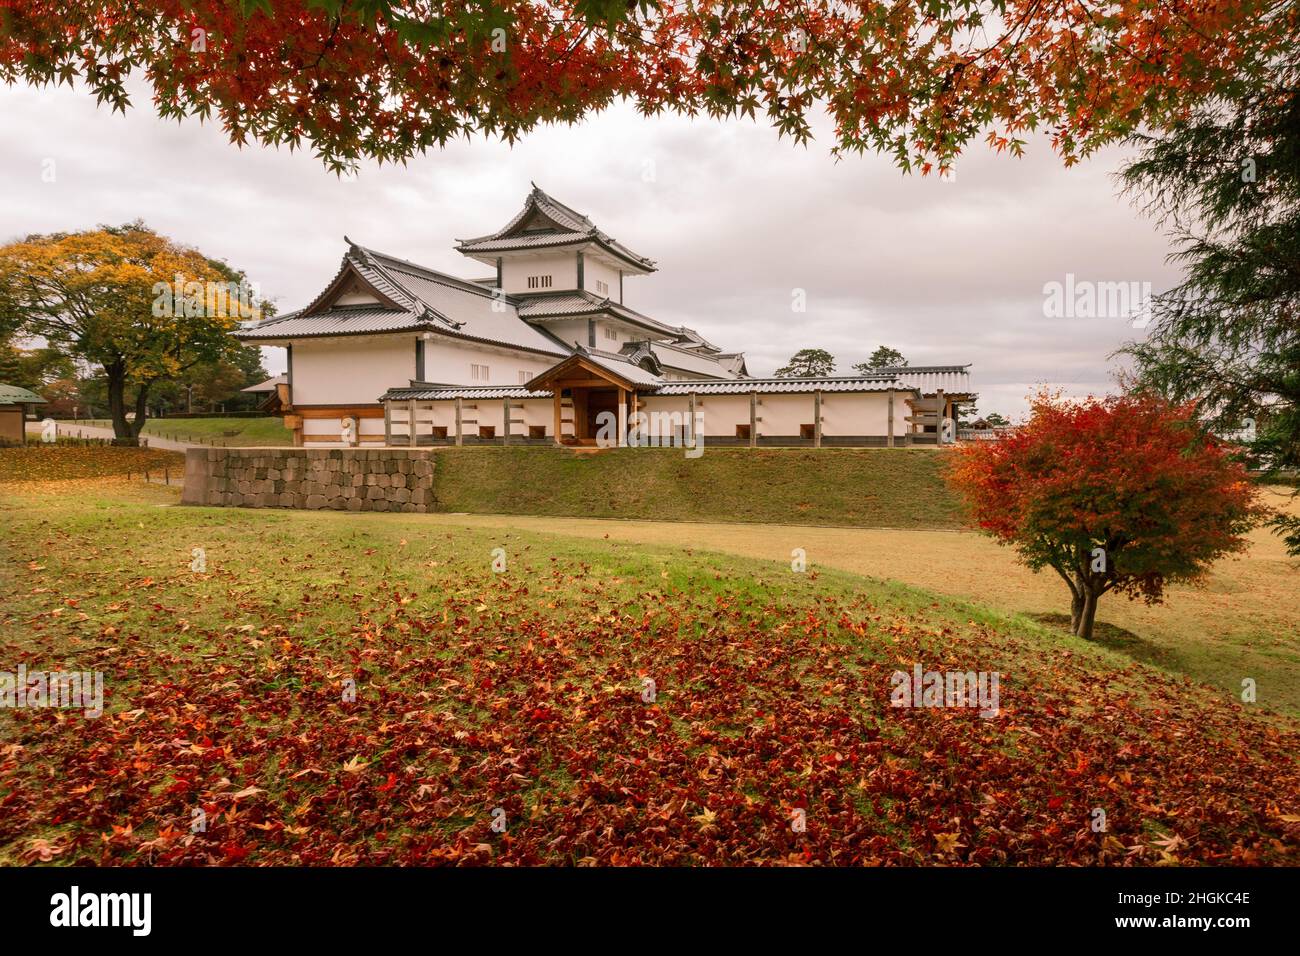 Paisaje otoñal del parque del castillo de Kanazawa en Kanazawa, Japón Foto de stock